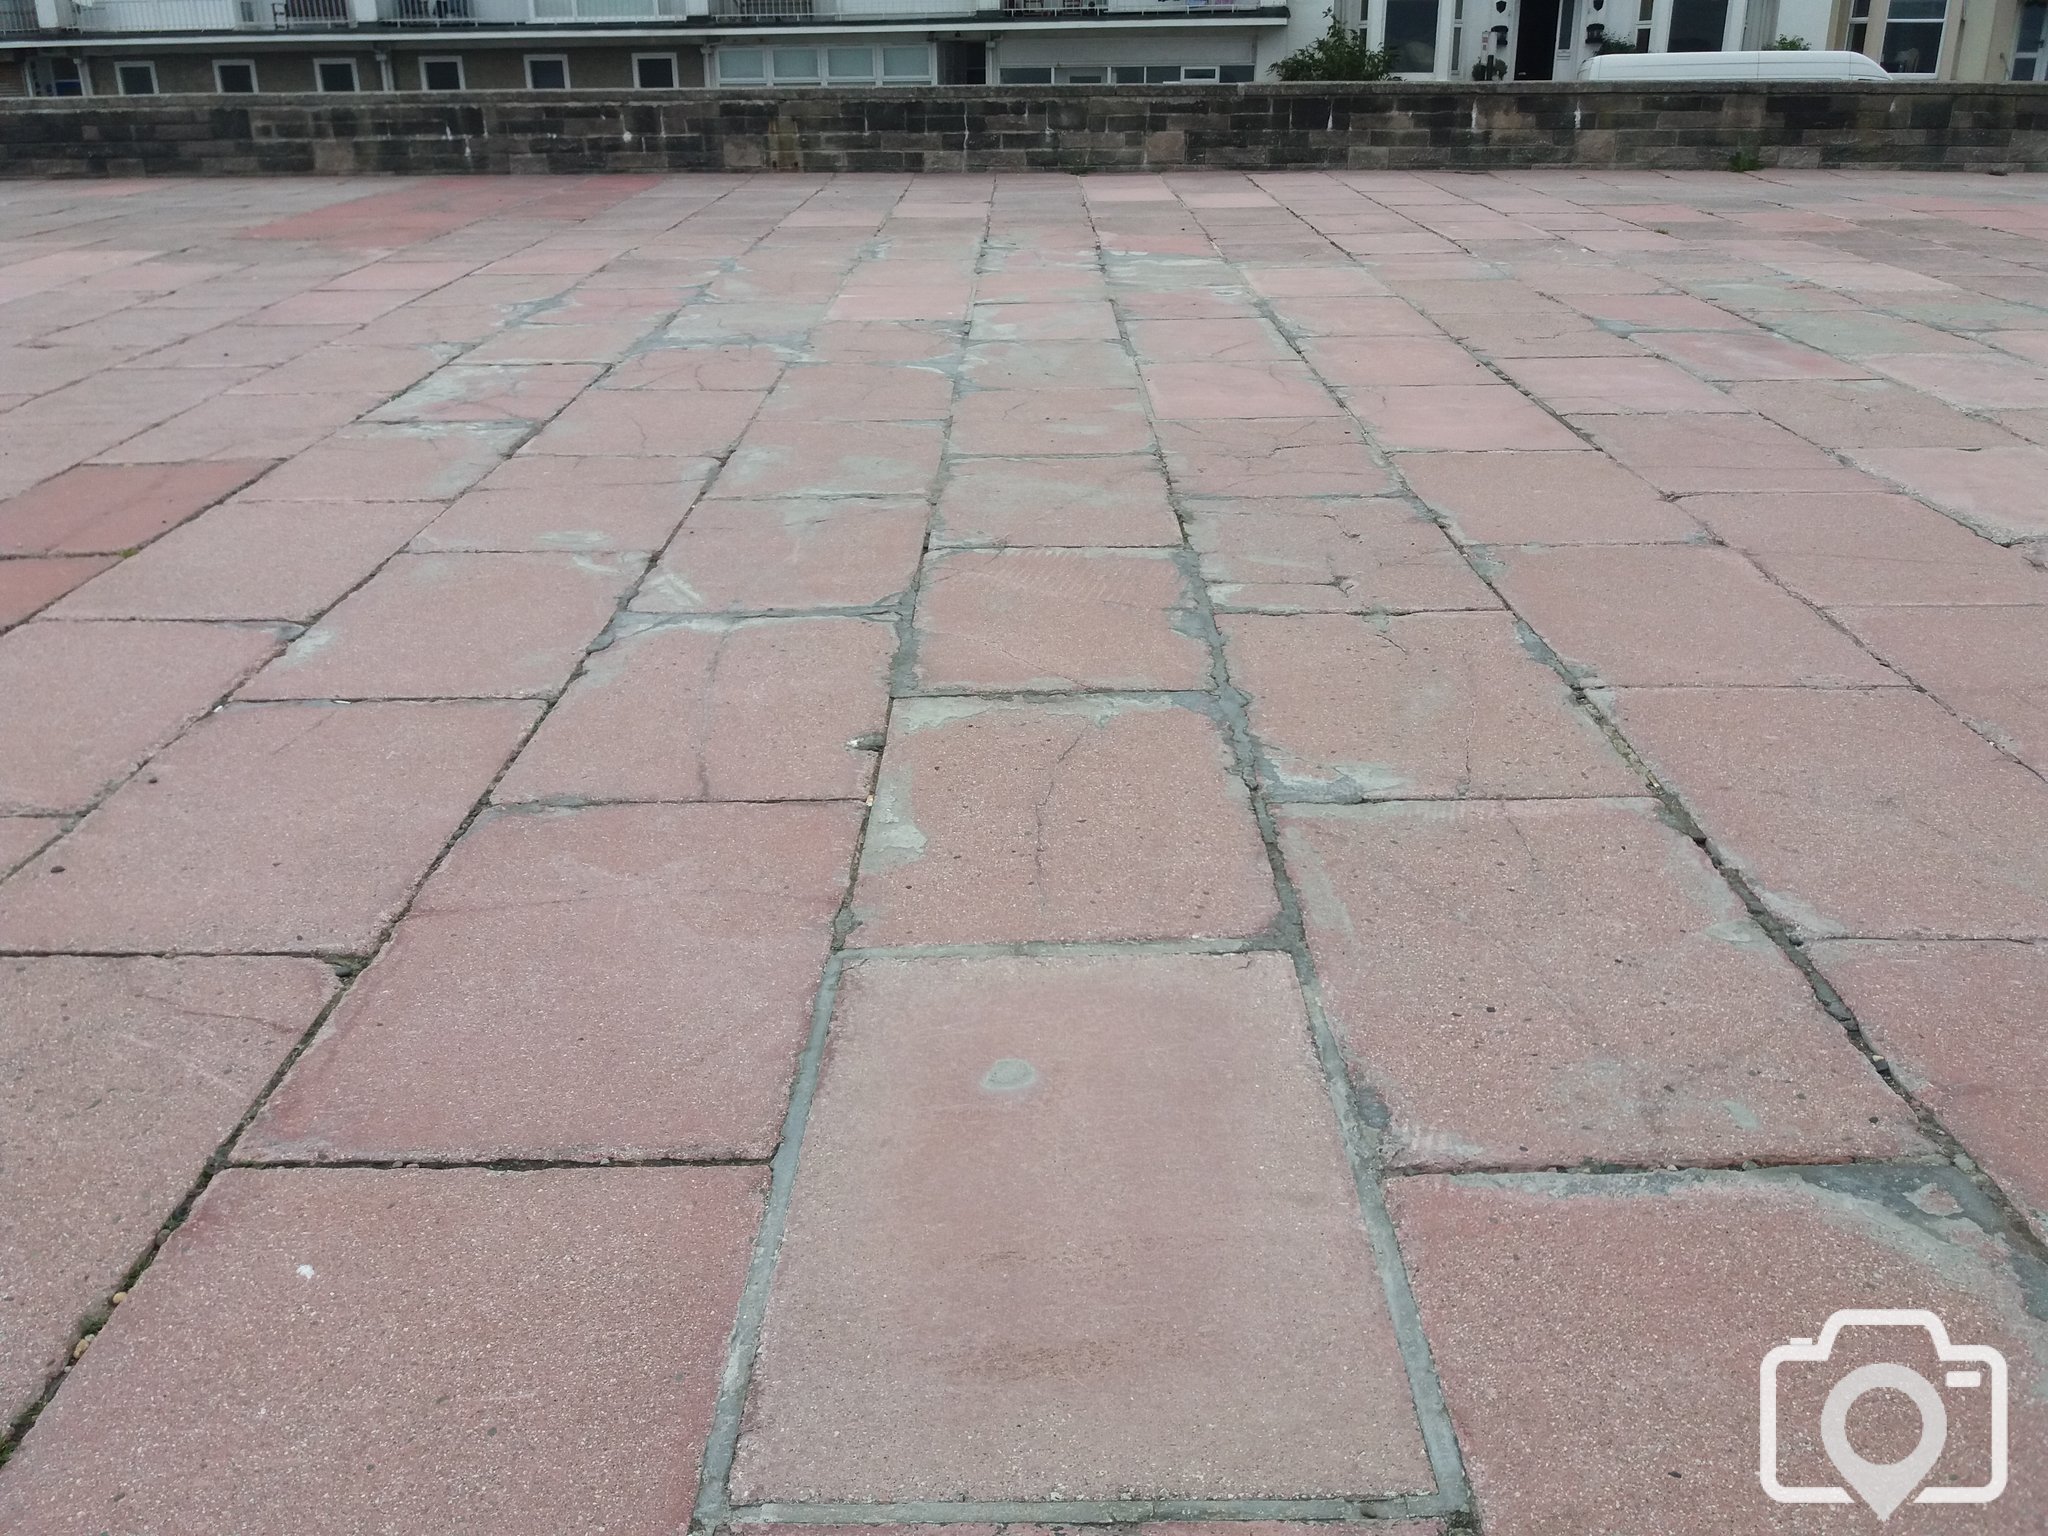 Cracked tiles promenade Penzance